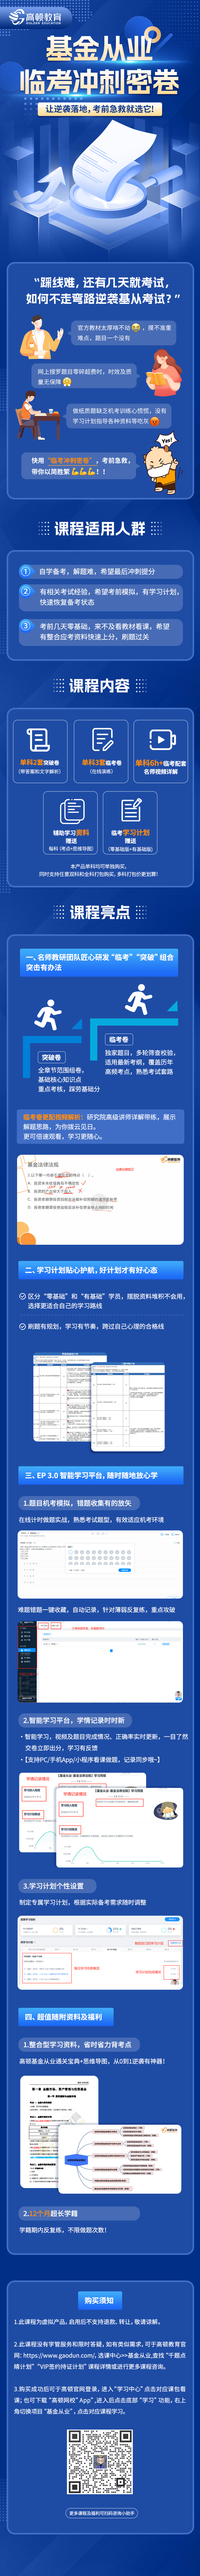 https://simg01.gaodunwangxiao.com/uploadfiles/product-center/202310/30/6e81d_20231030175405.jpg